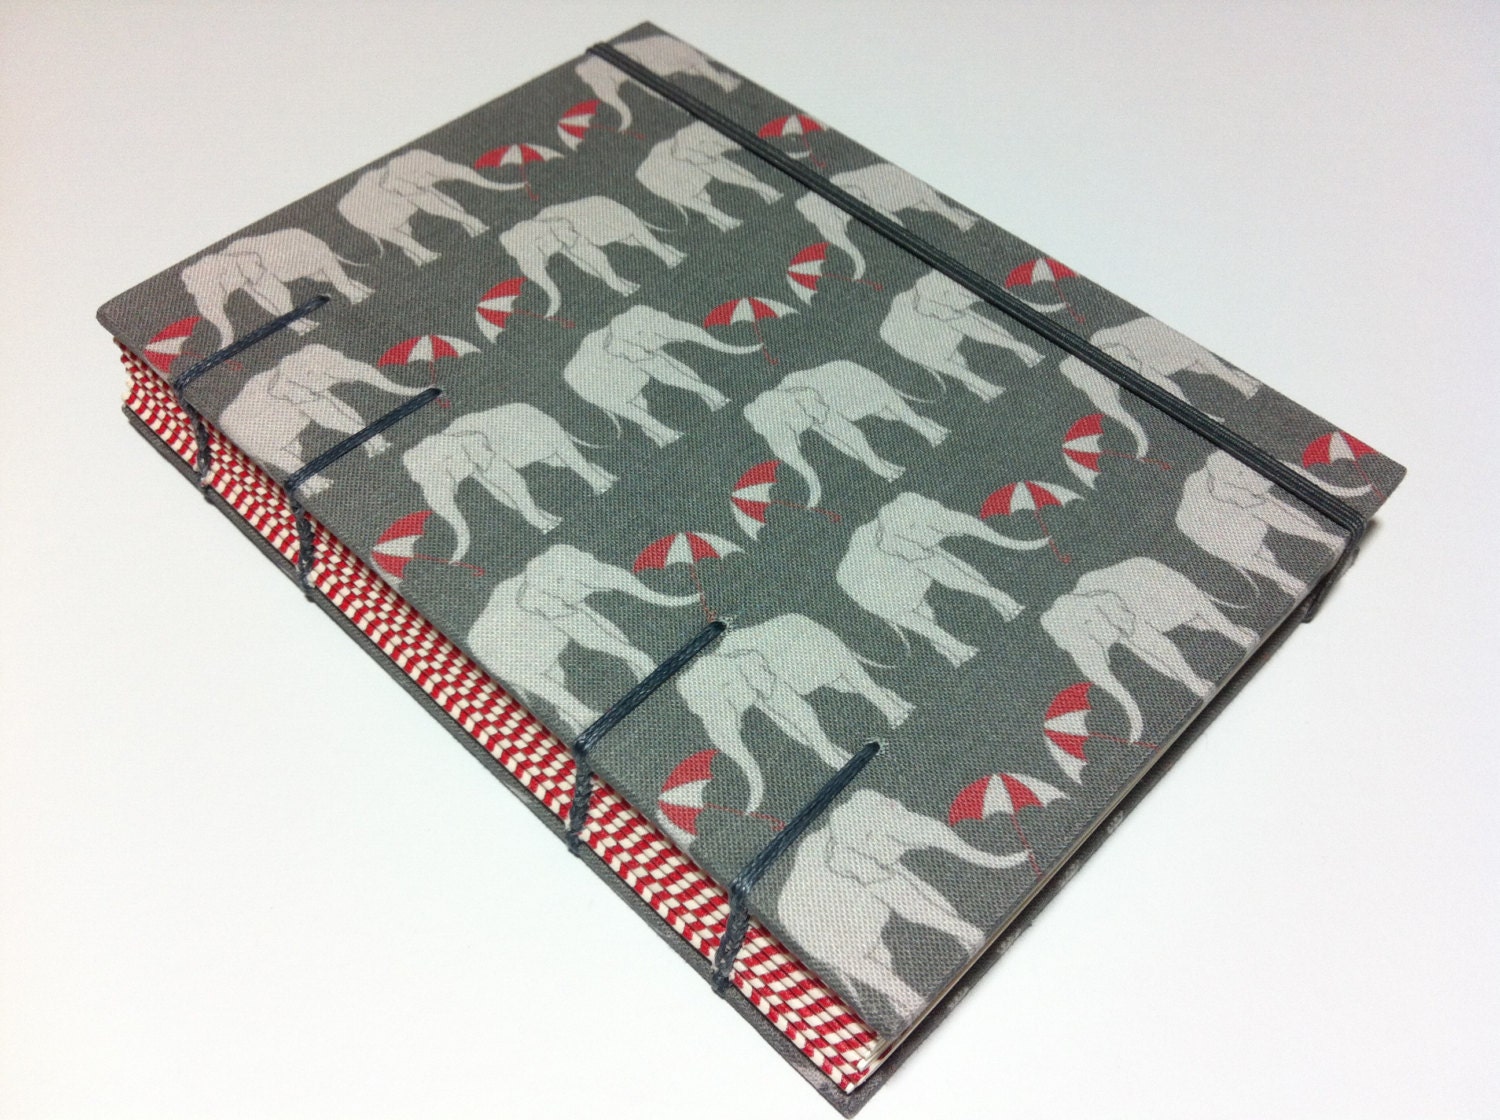 Handmade Fabric Coptic Stitched Journal Notebook - Elephants with Umbrellas on Gray - BBhandmades